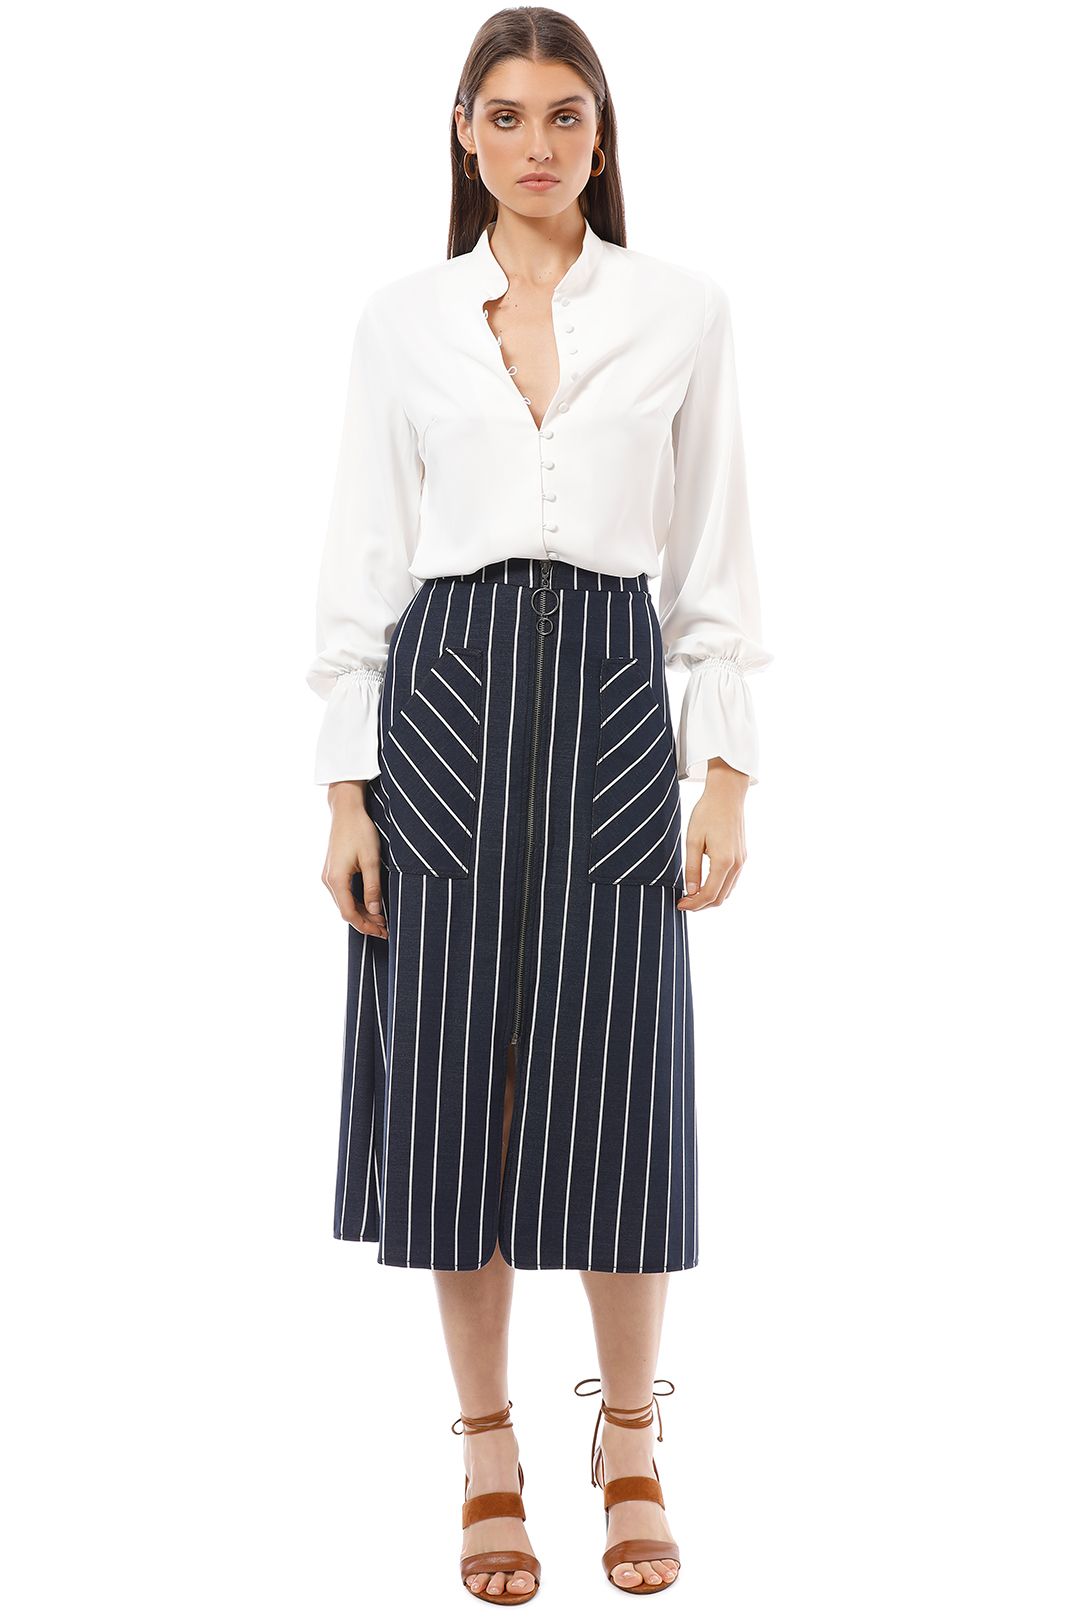 Veronika Maine - Textured Stripe Zip Skirt - Navy - Front